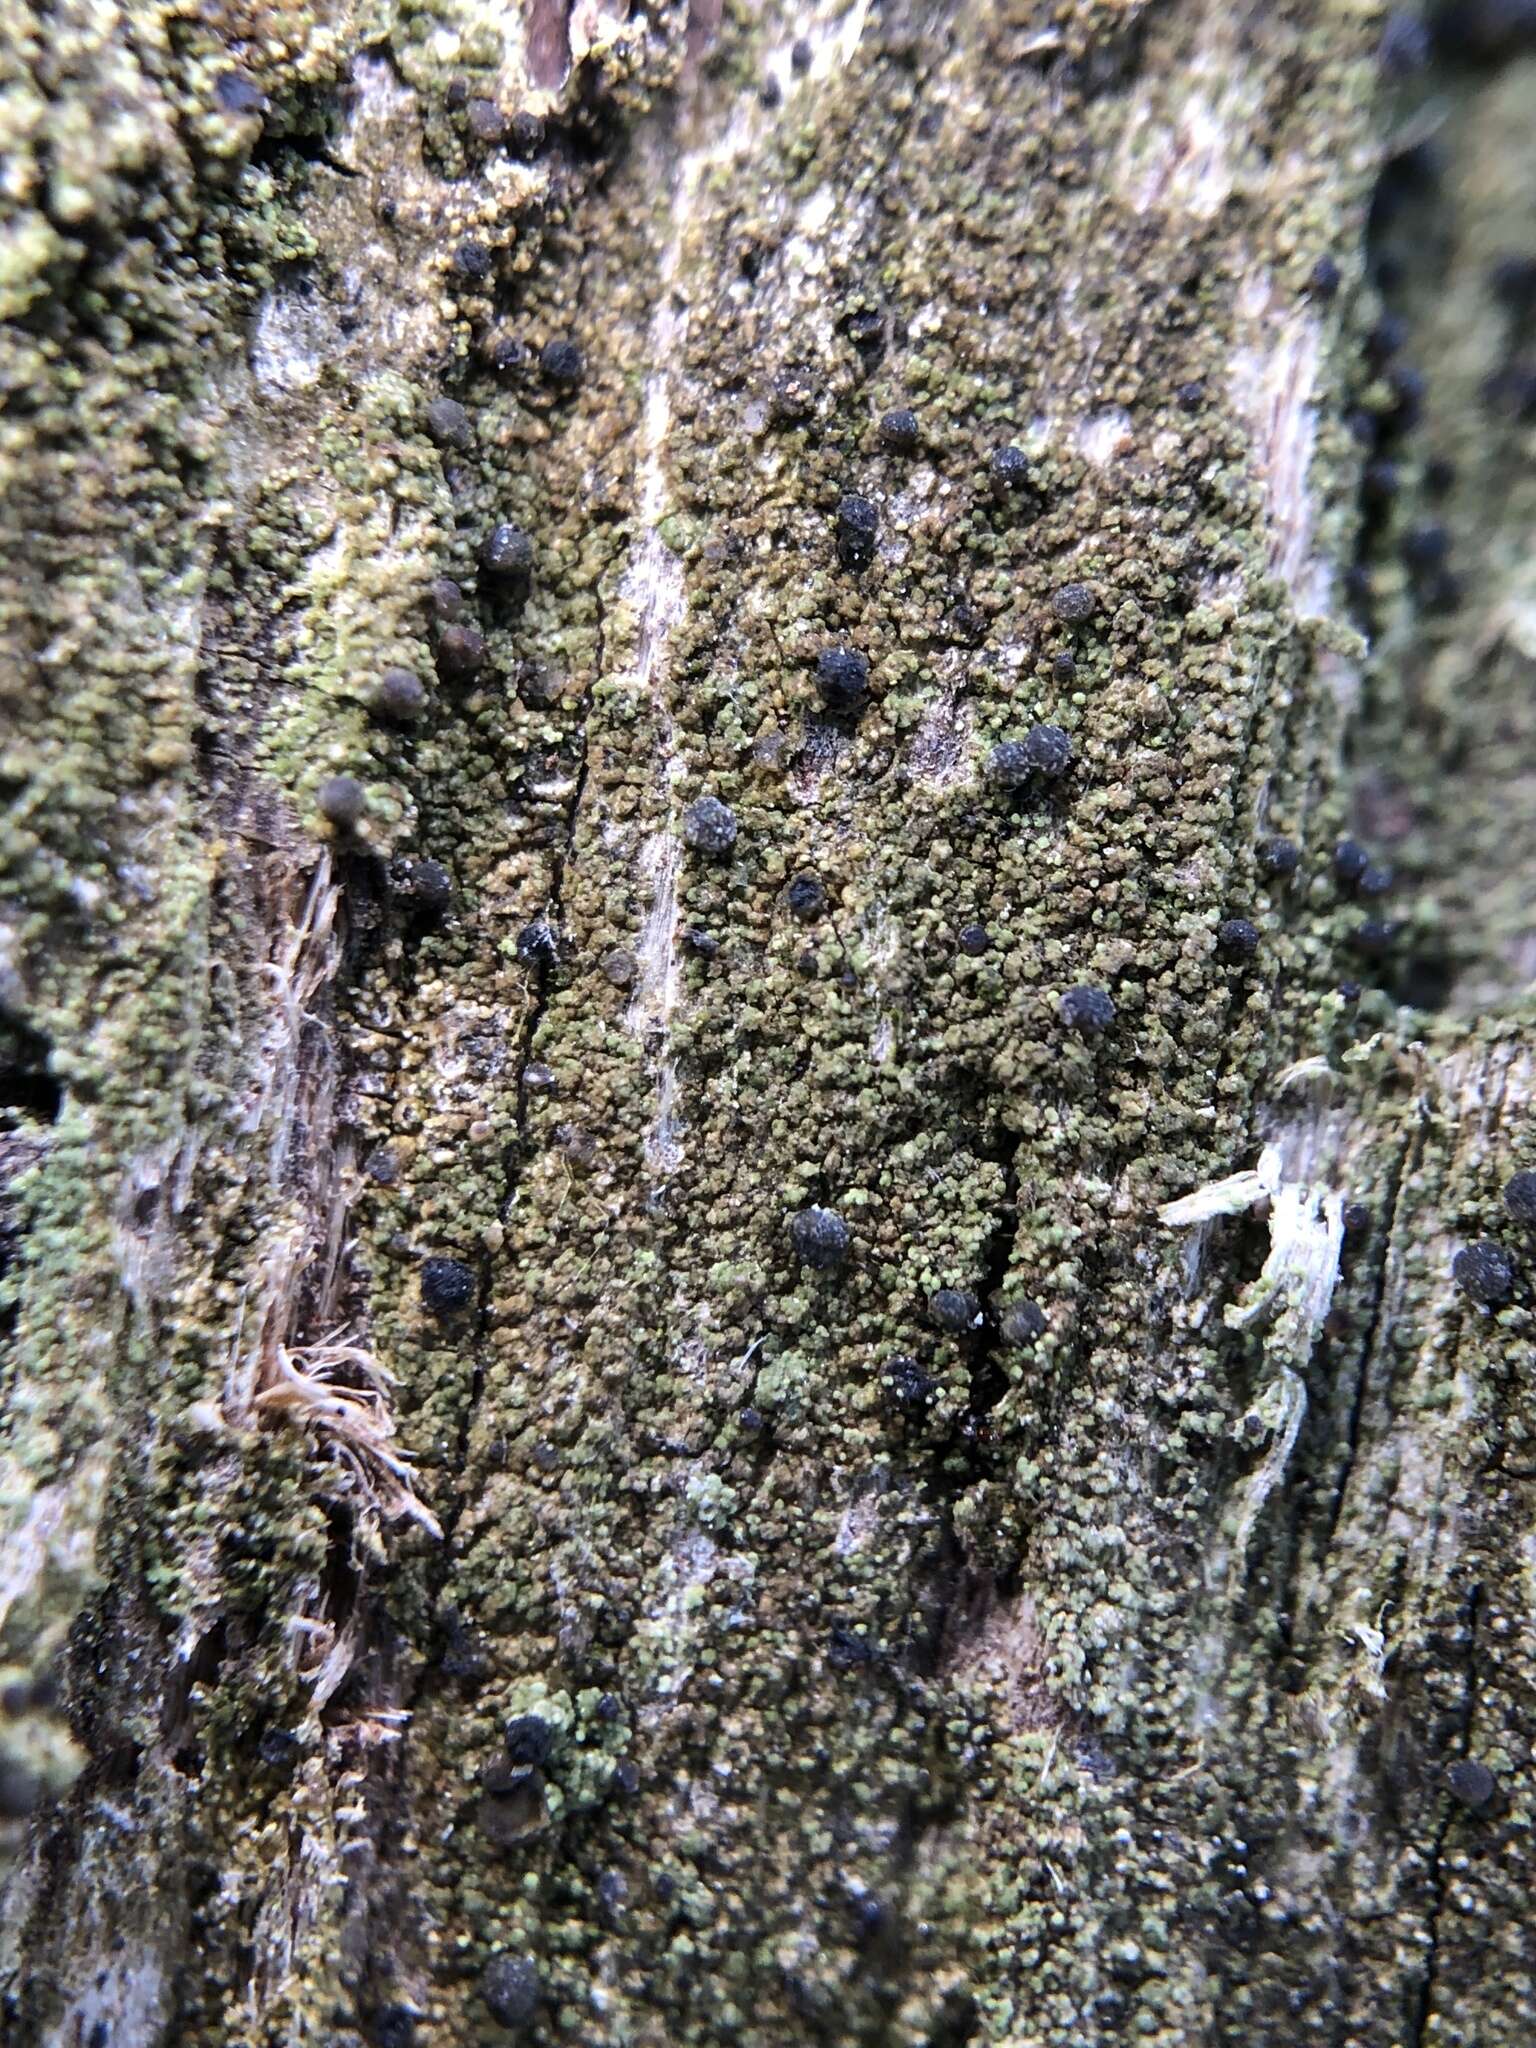 Image of Bilimbia sabuletorum (Schreb.) Arnold